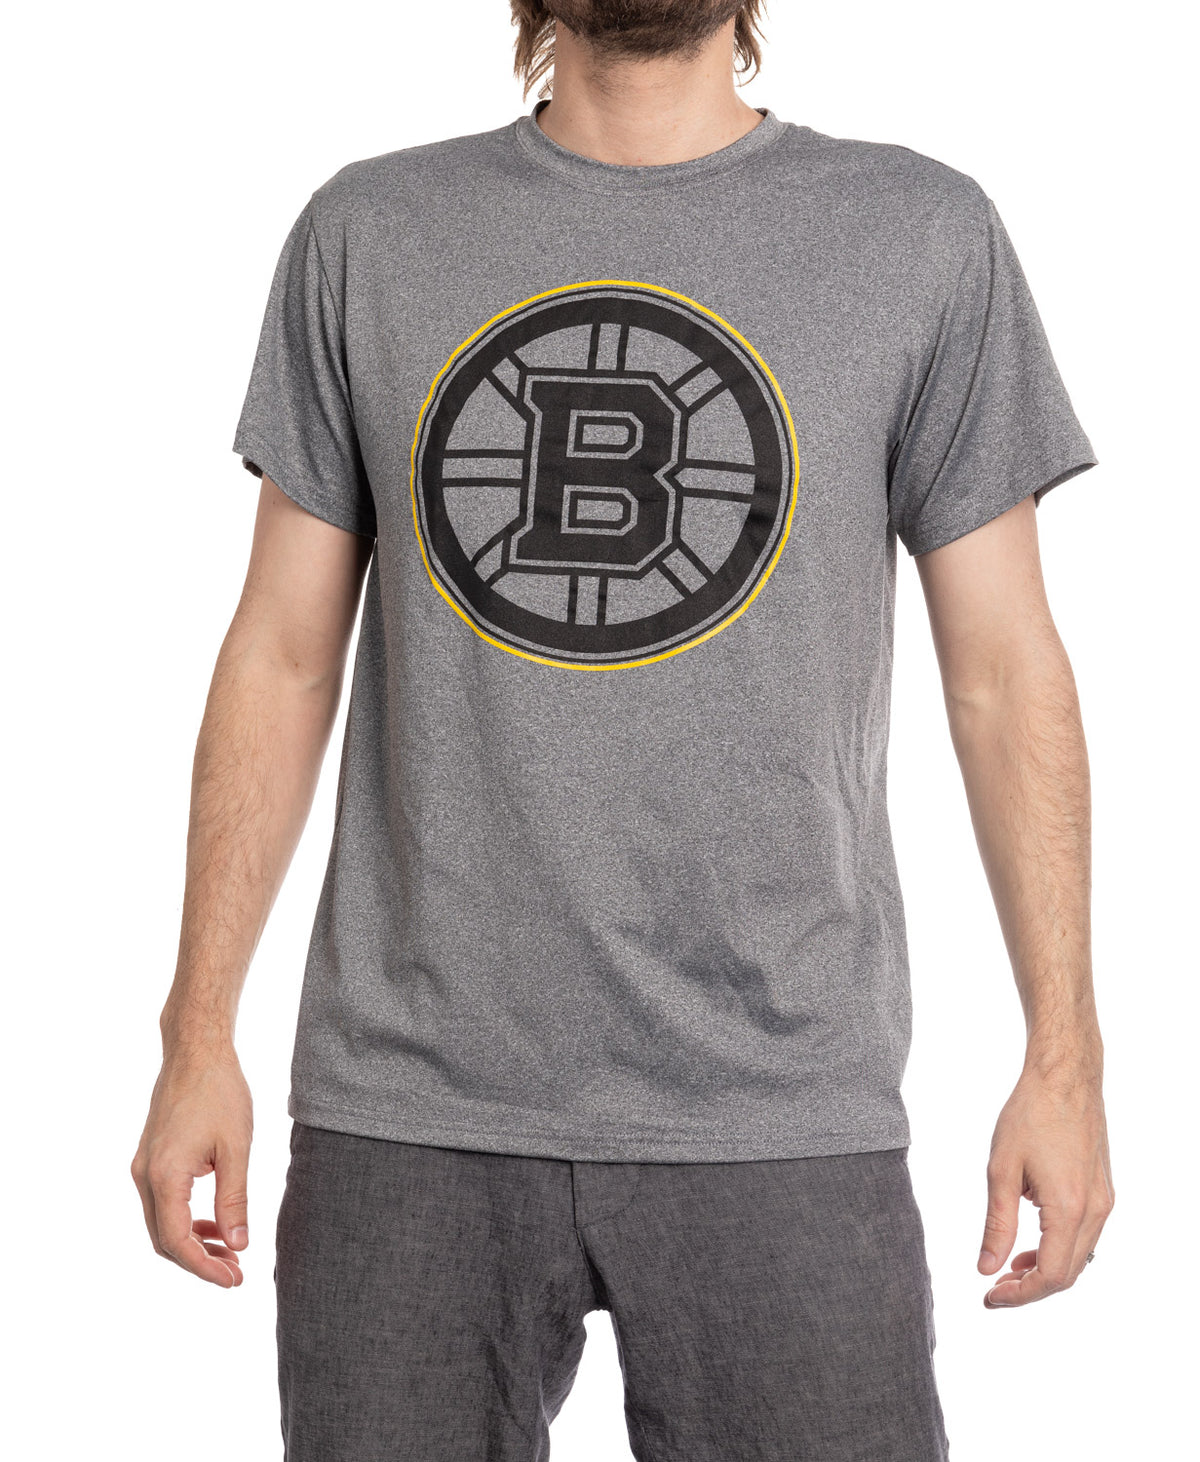 Boston Bruins NHL Men's Performance Rash Guard Base Layer Moisture-Wicking T-Shirt - Grey